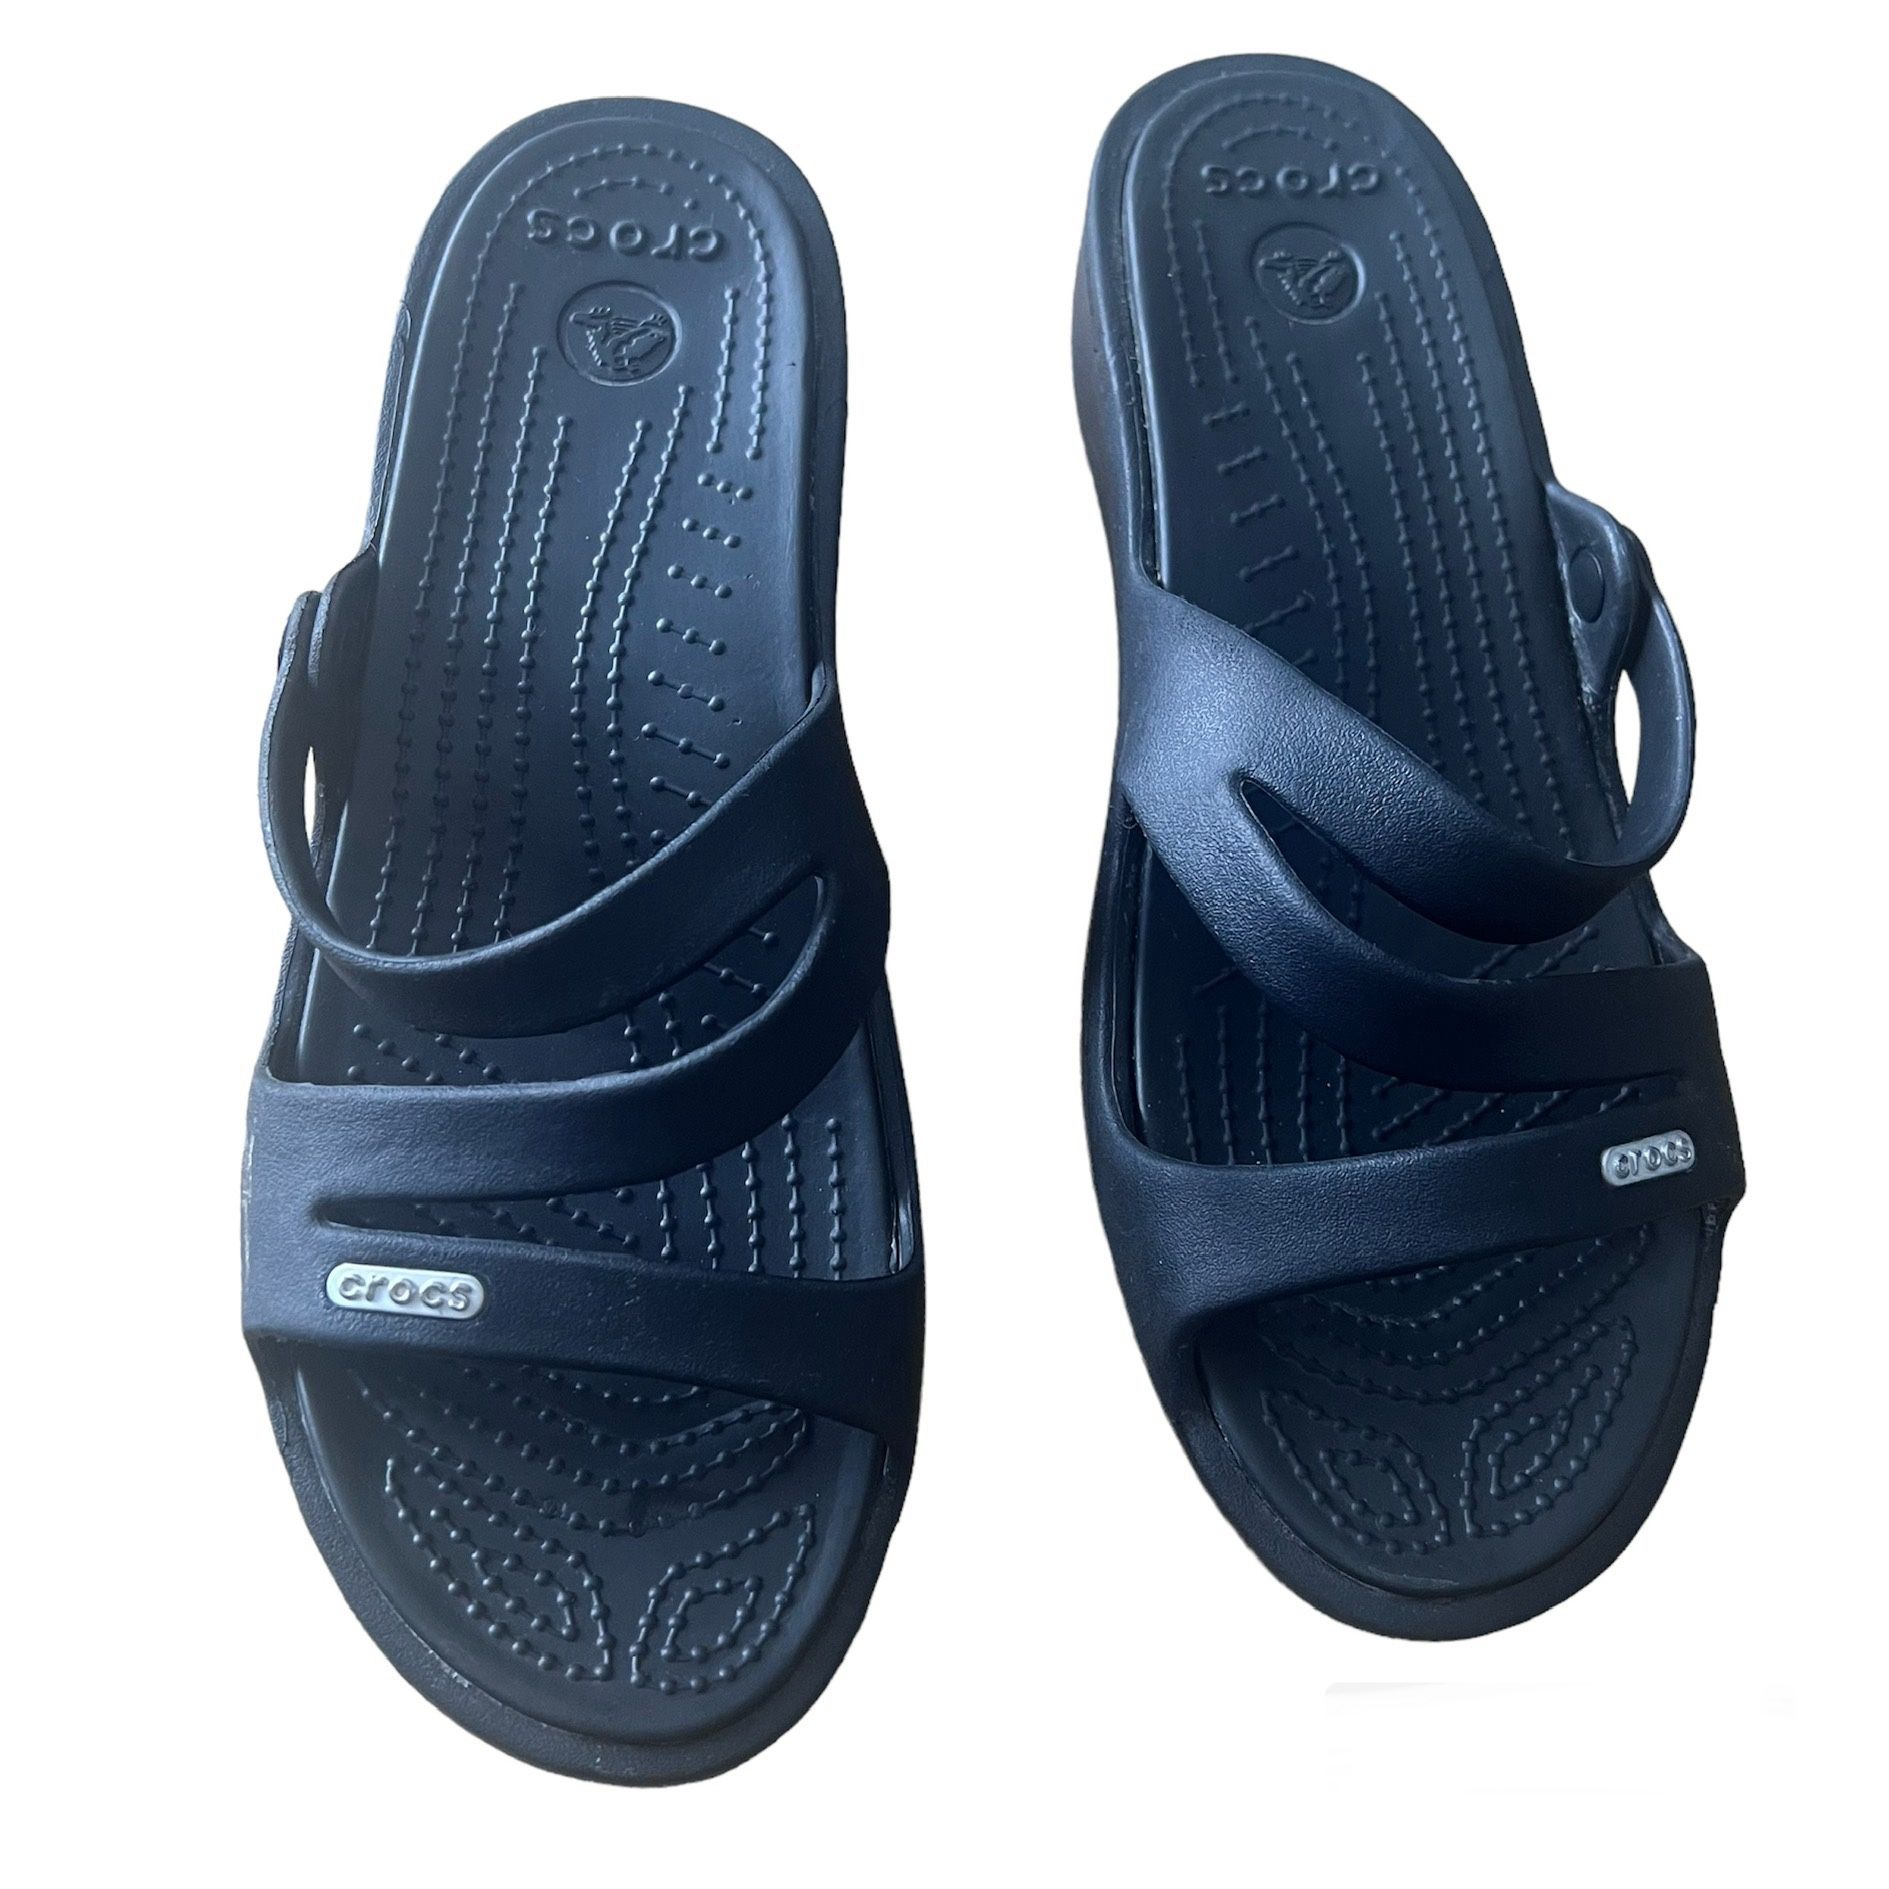 Crocs Women's 8 Black Patricia Wedge Slides Sandals 3 Strap Slip On Wedges